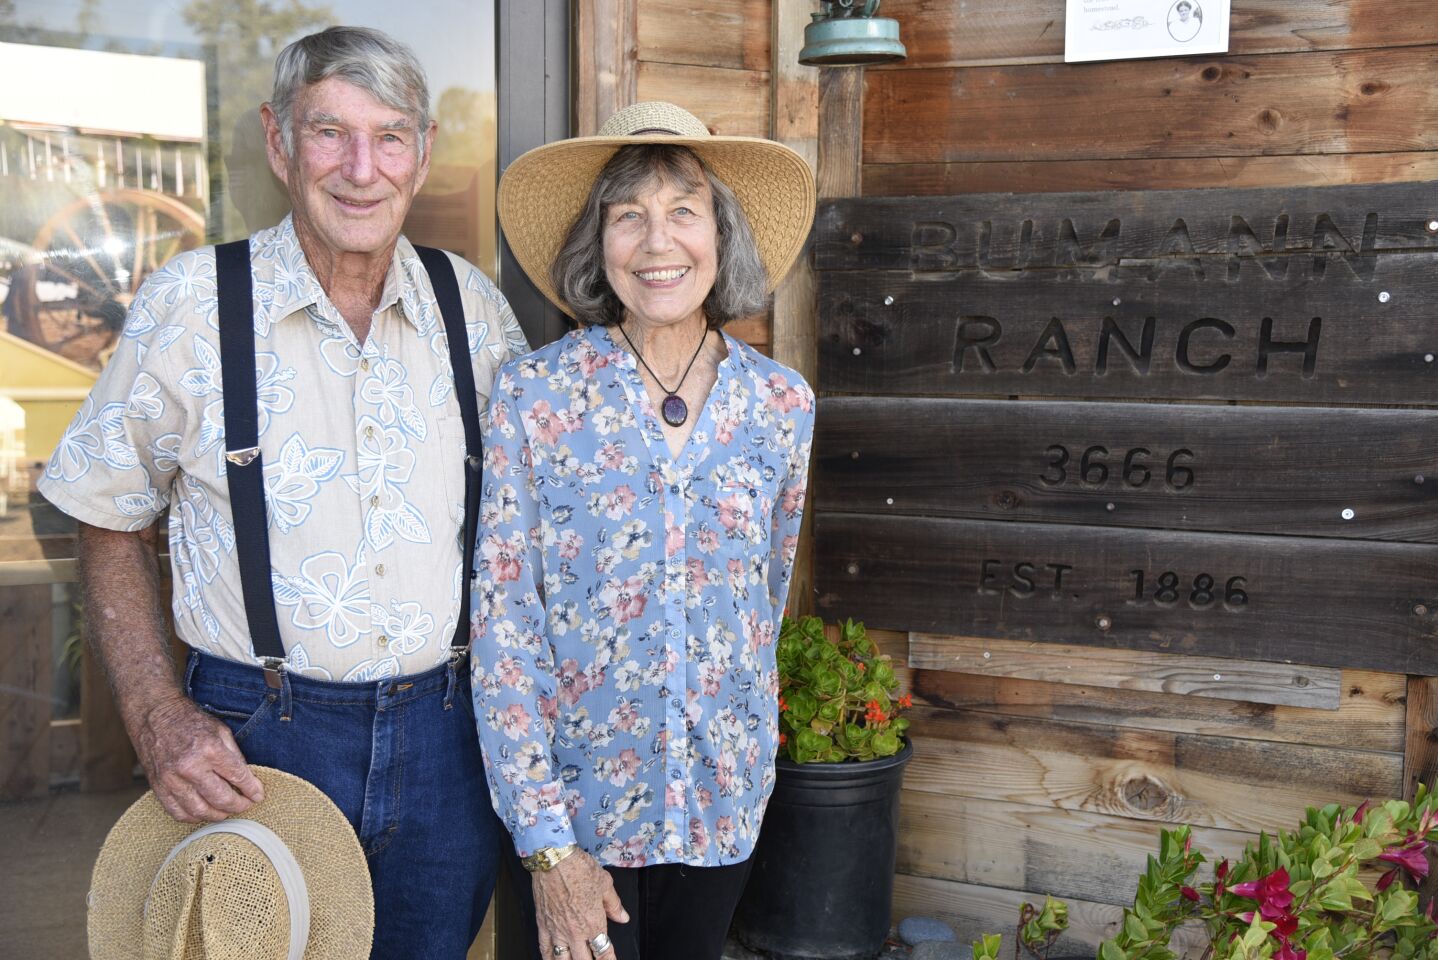 Current Bumann Ranch residents Richard and Twink Bumann